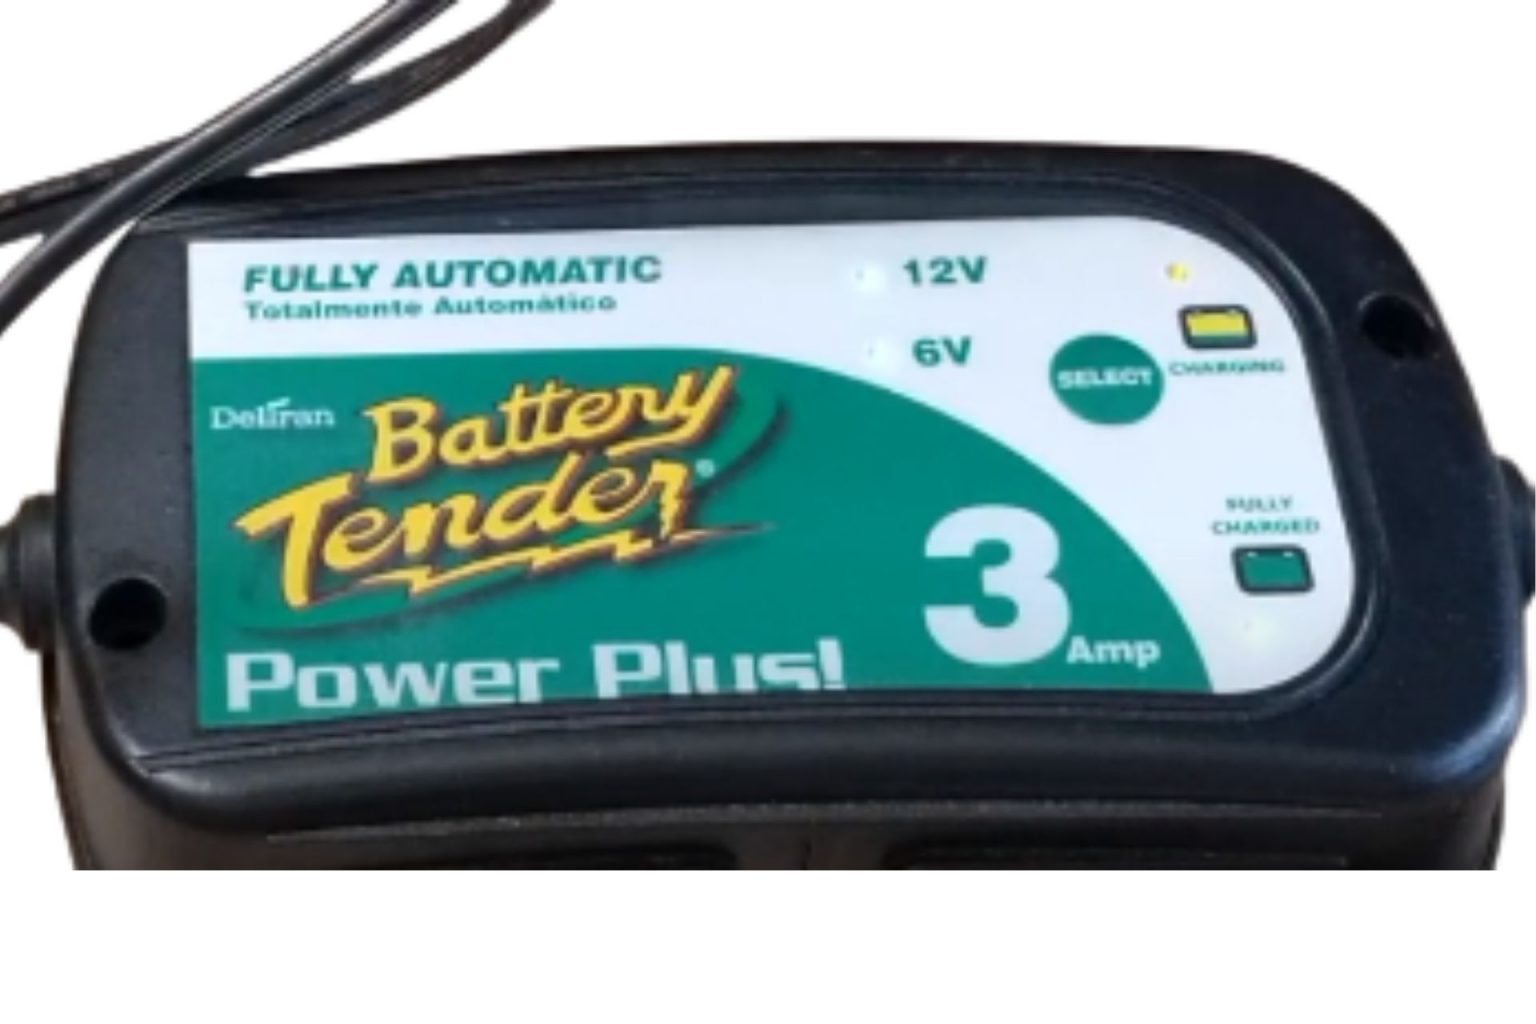 traveller battery charger green light flashing